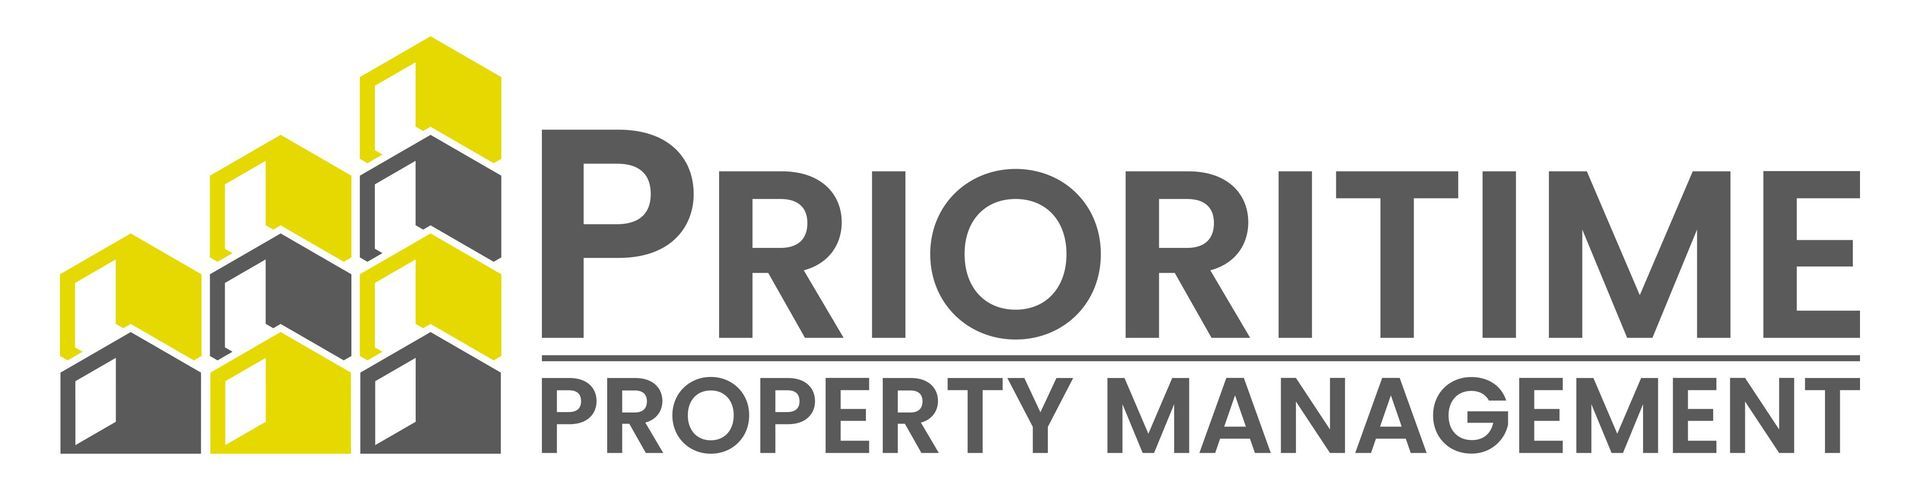 Prioritime Property Management Logo